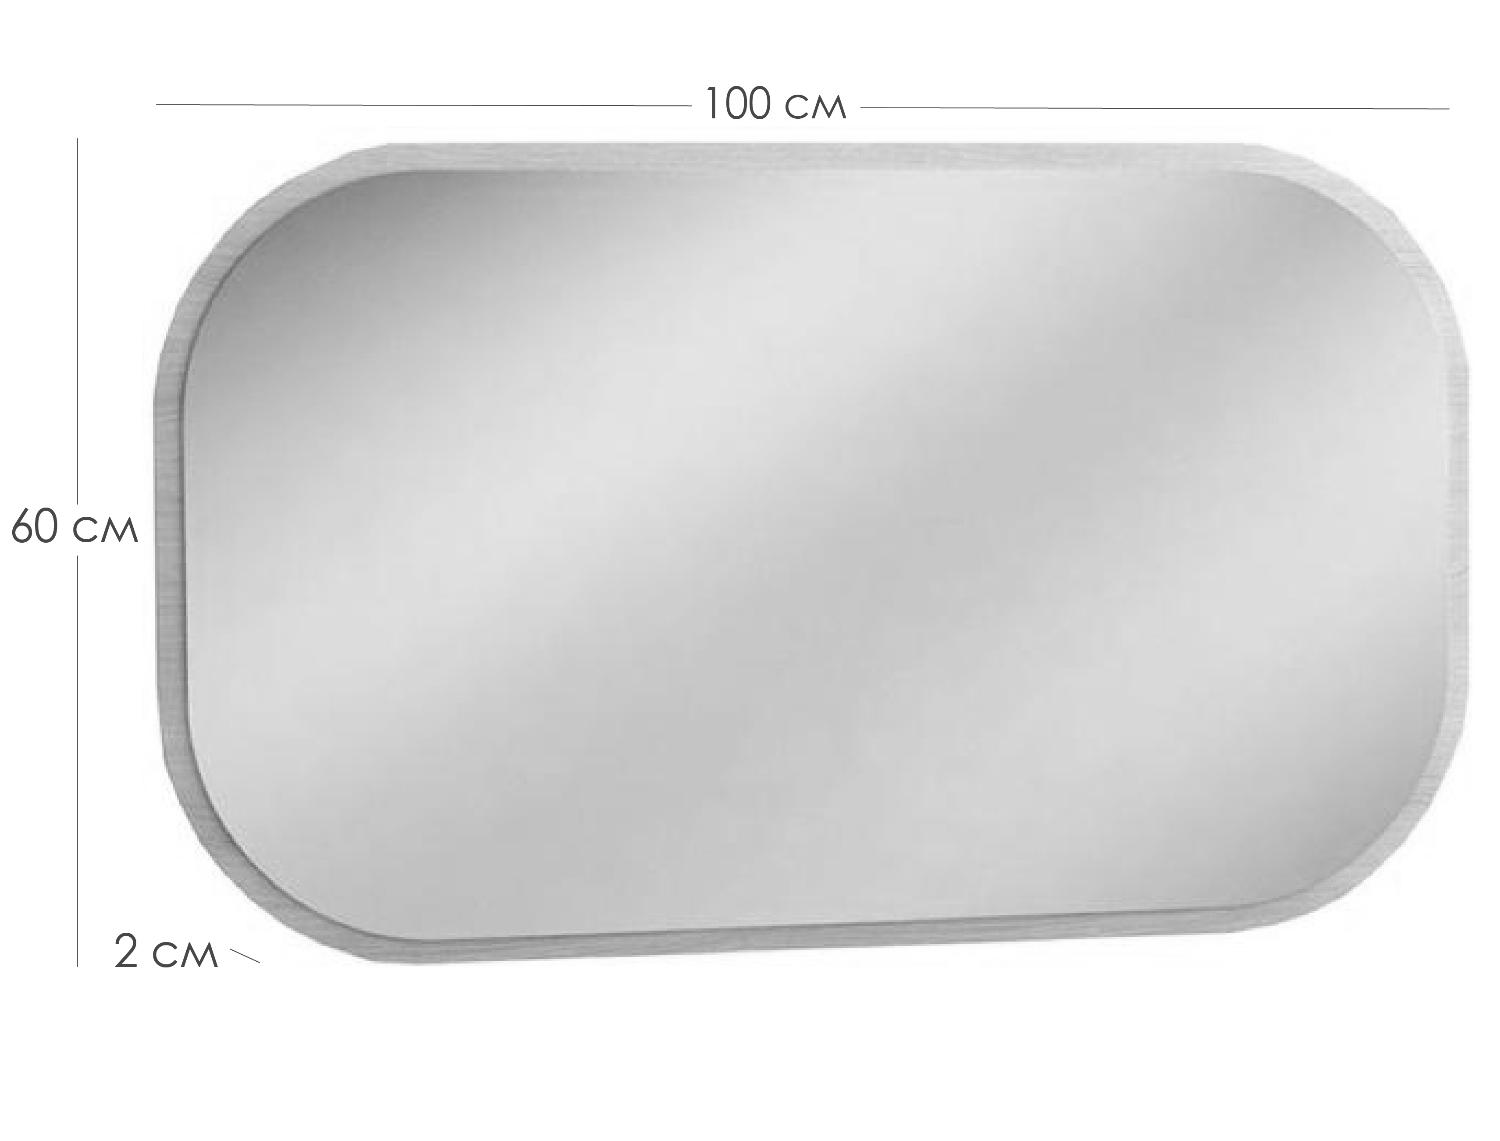 Зеркало для комода R-Home Сканди, размер 100x2x60 см, цвет: Орех Табак(4009325H_Грей)4009325H_Грей